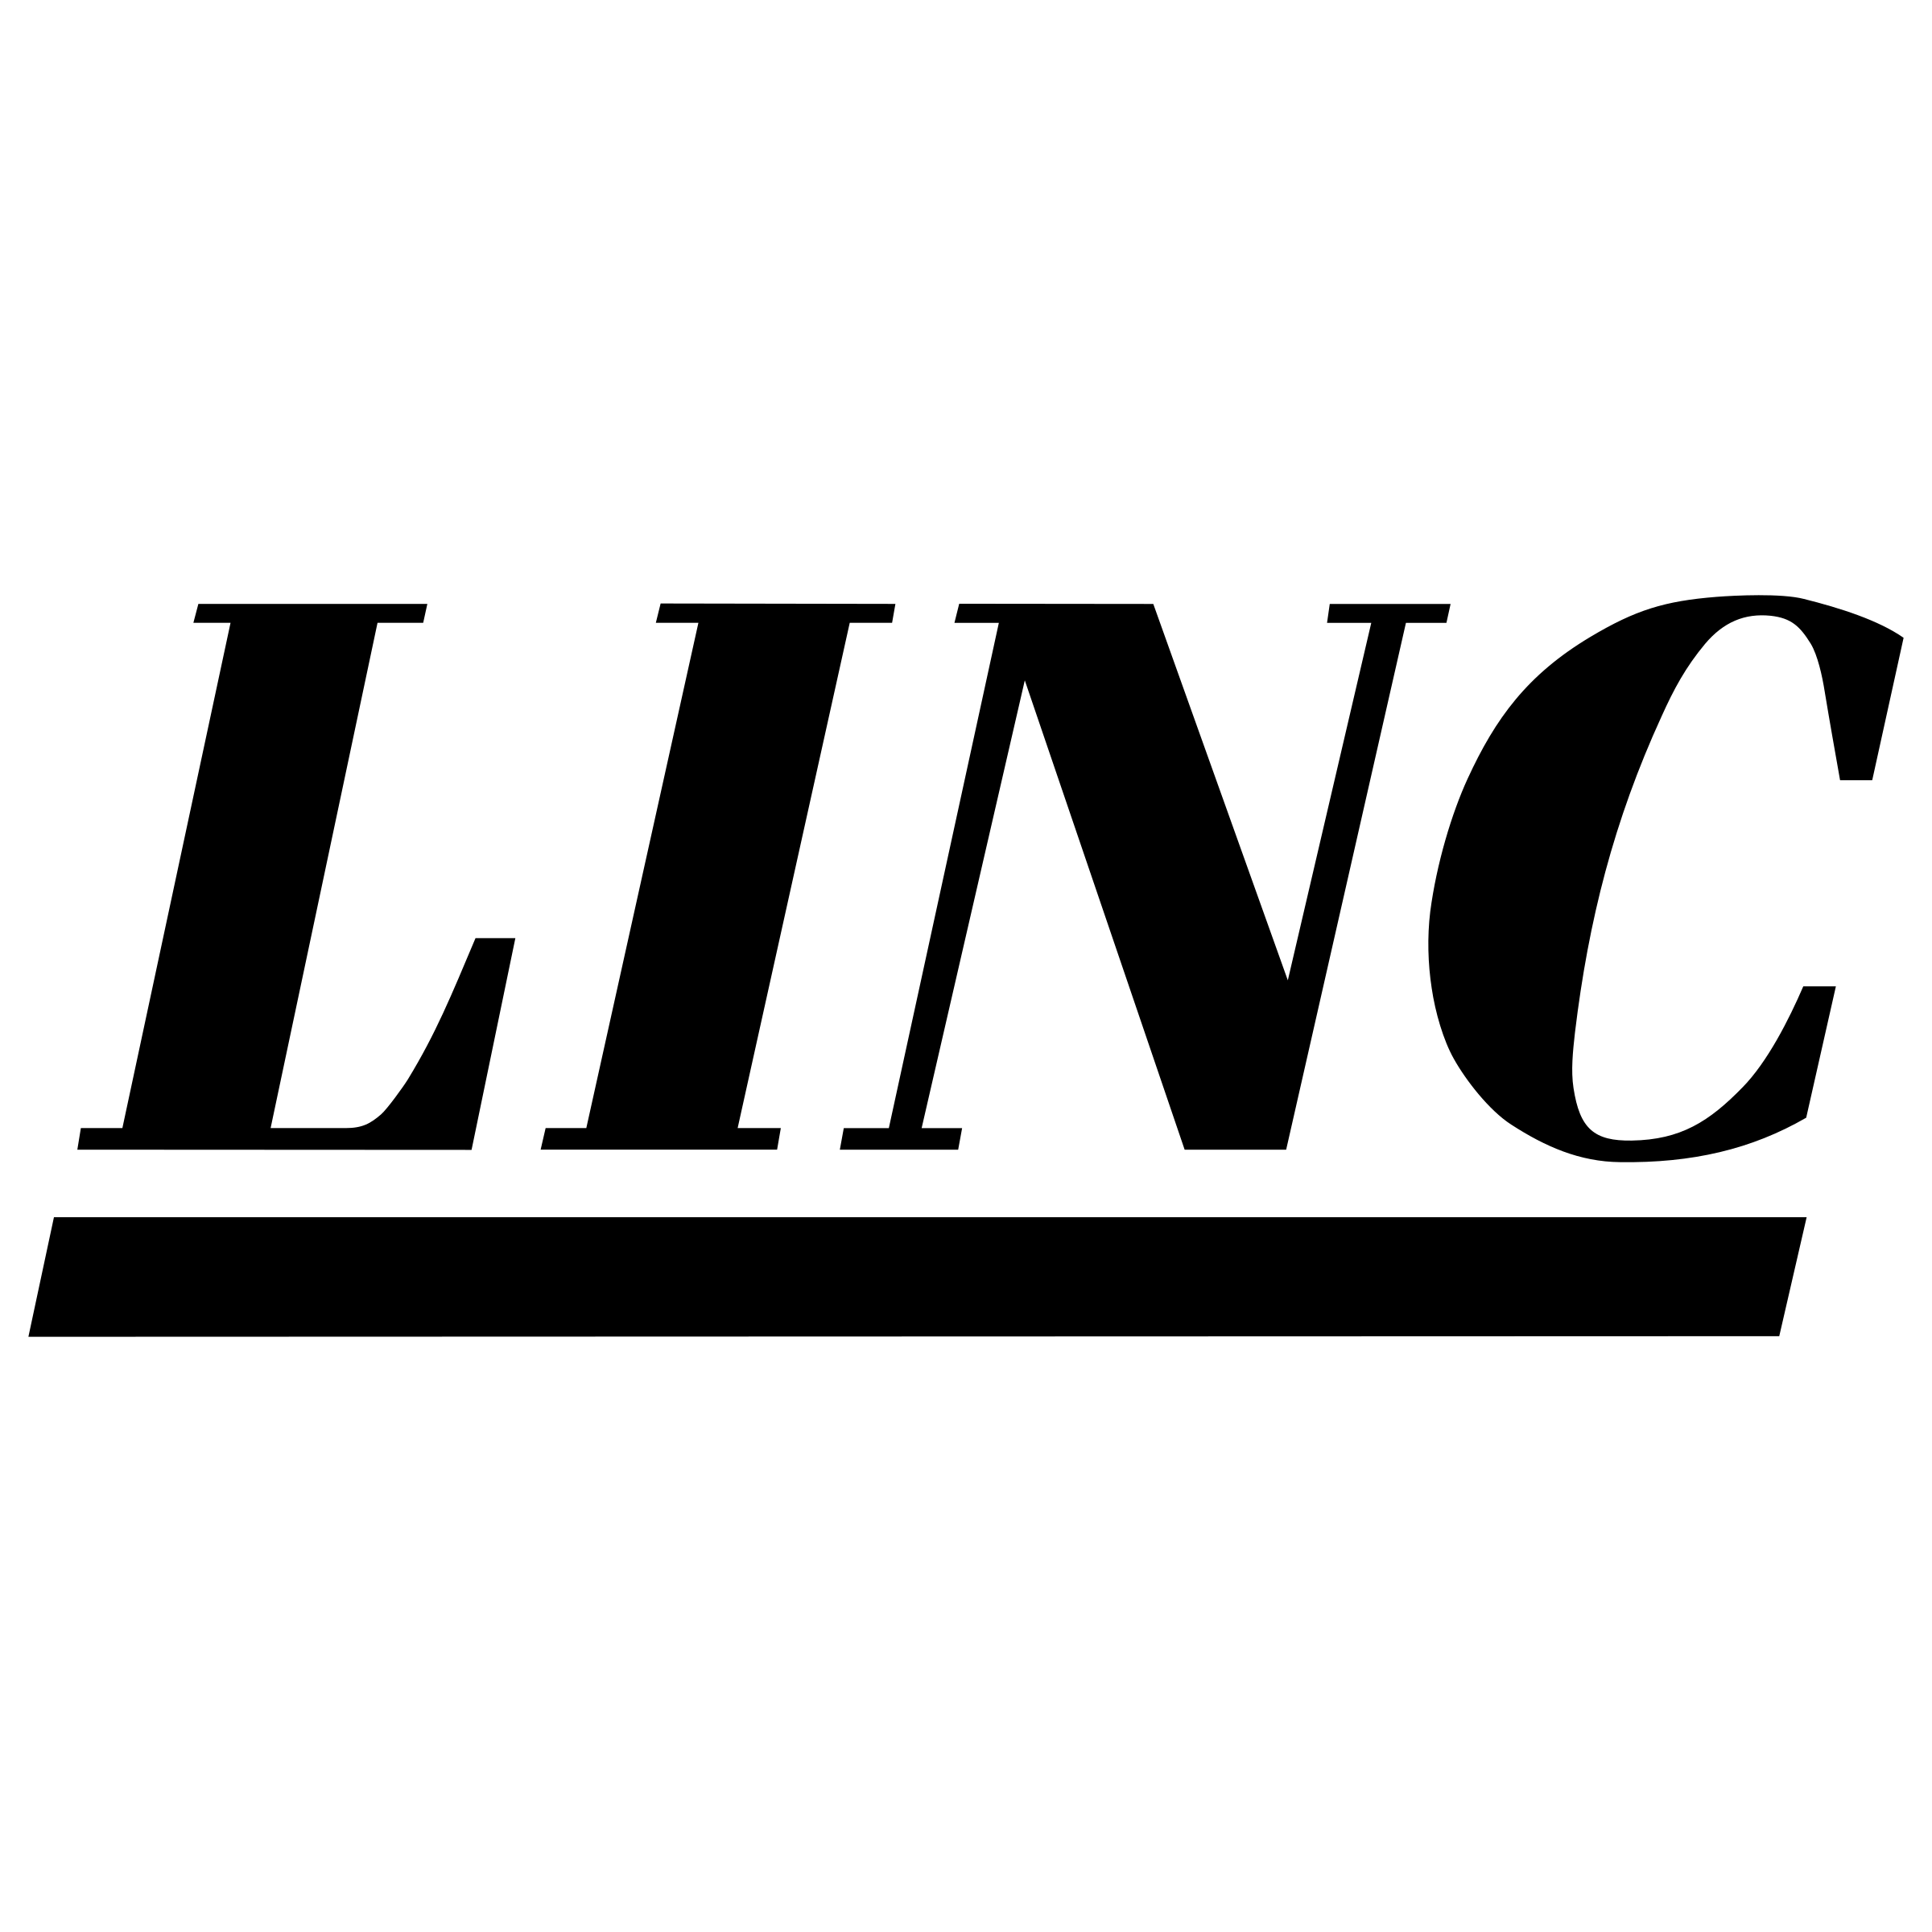 Linc Logo - Linc Logo PNG Transparent & SVG Vector - Freebie Supply